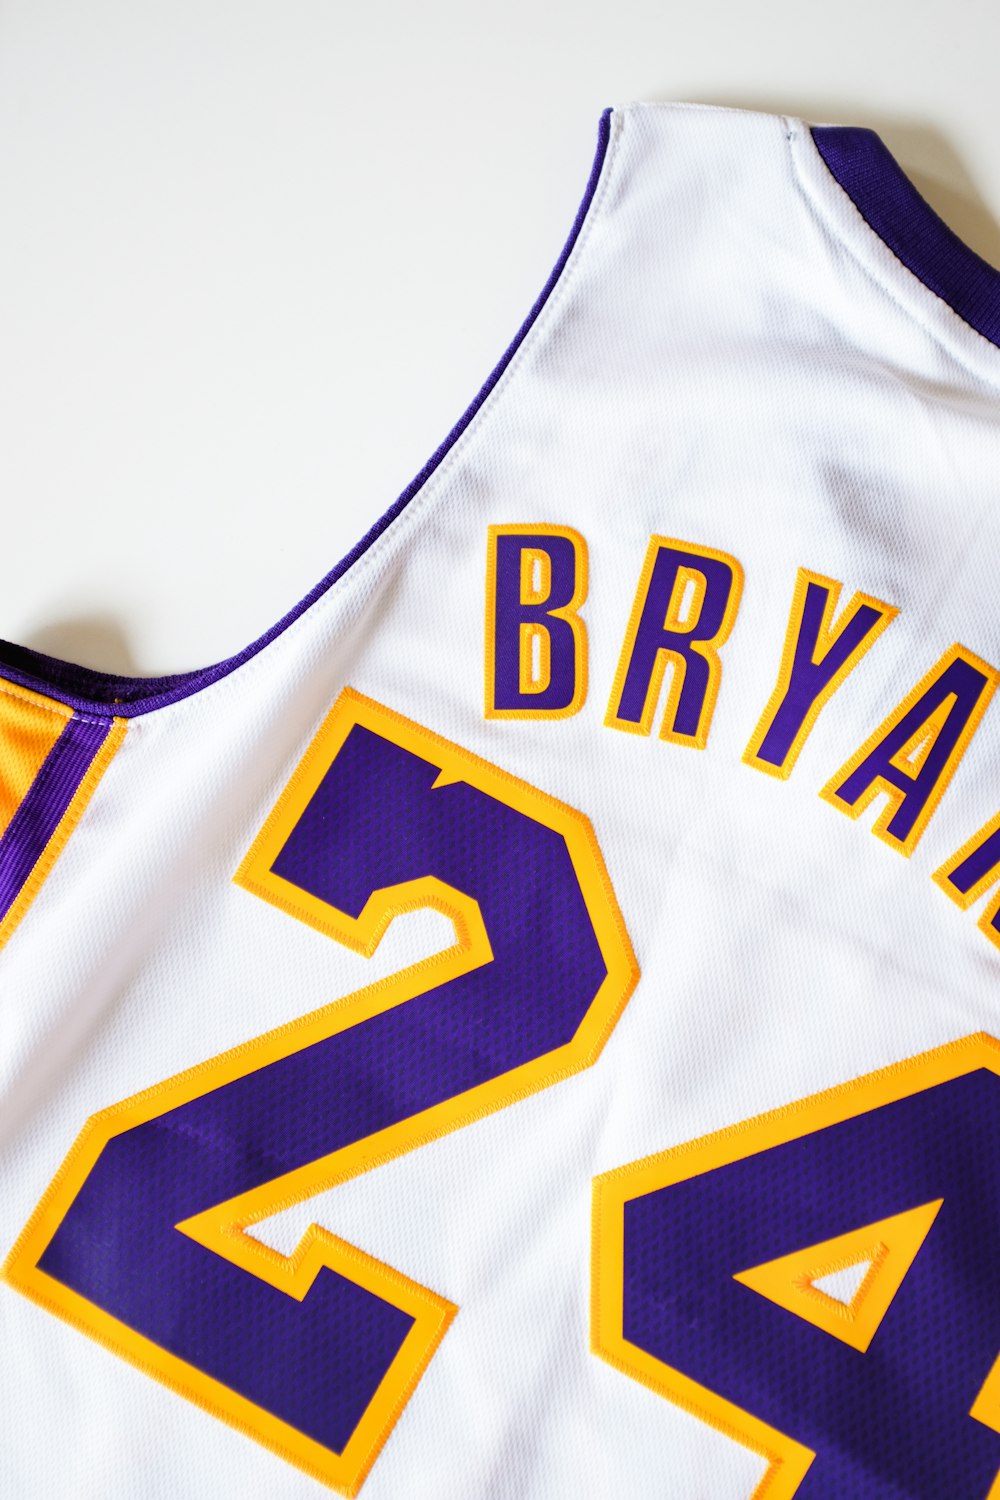 Kobe Bryant, Lakers NBA jersey #24 photo – Free Kobe bryant Image